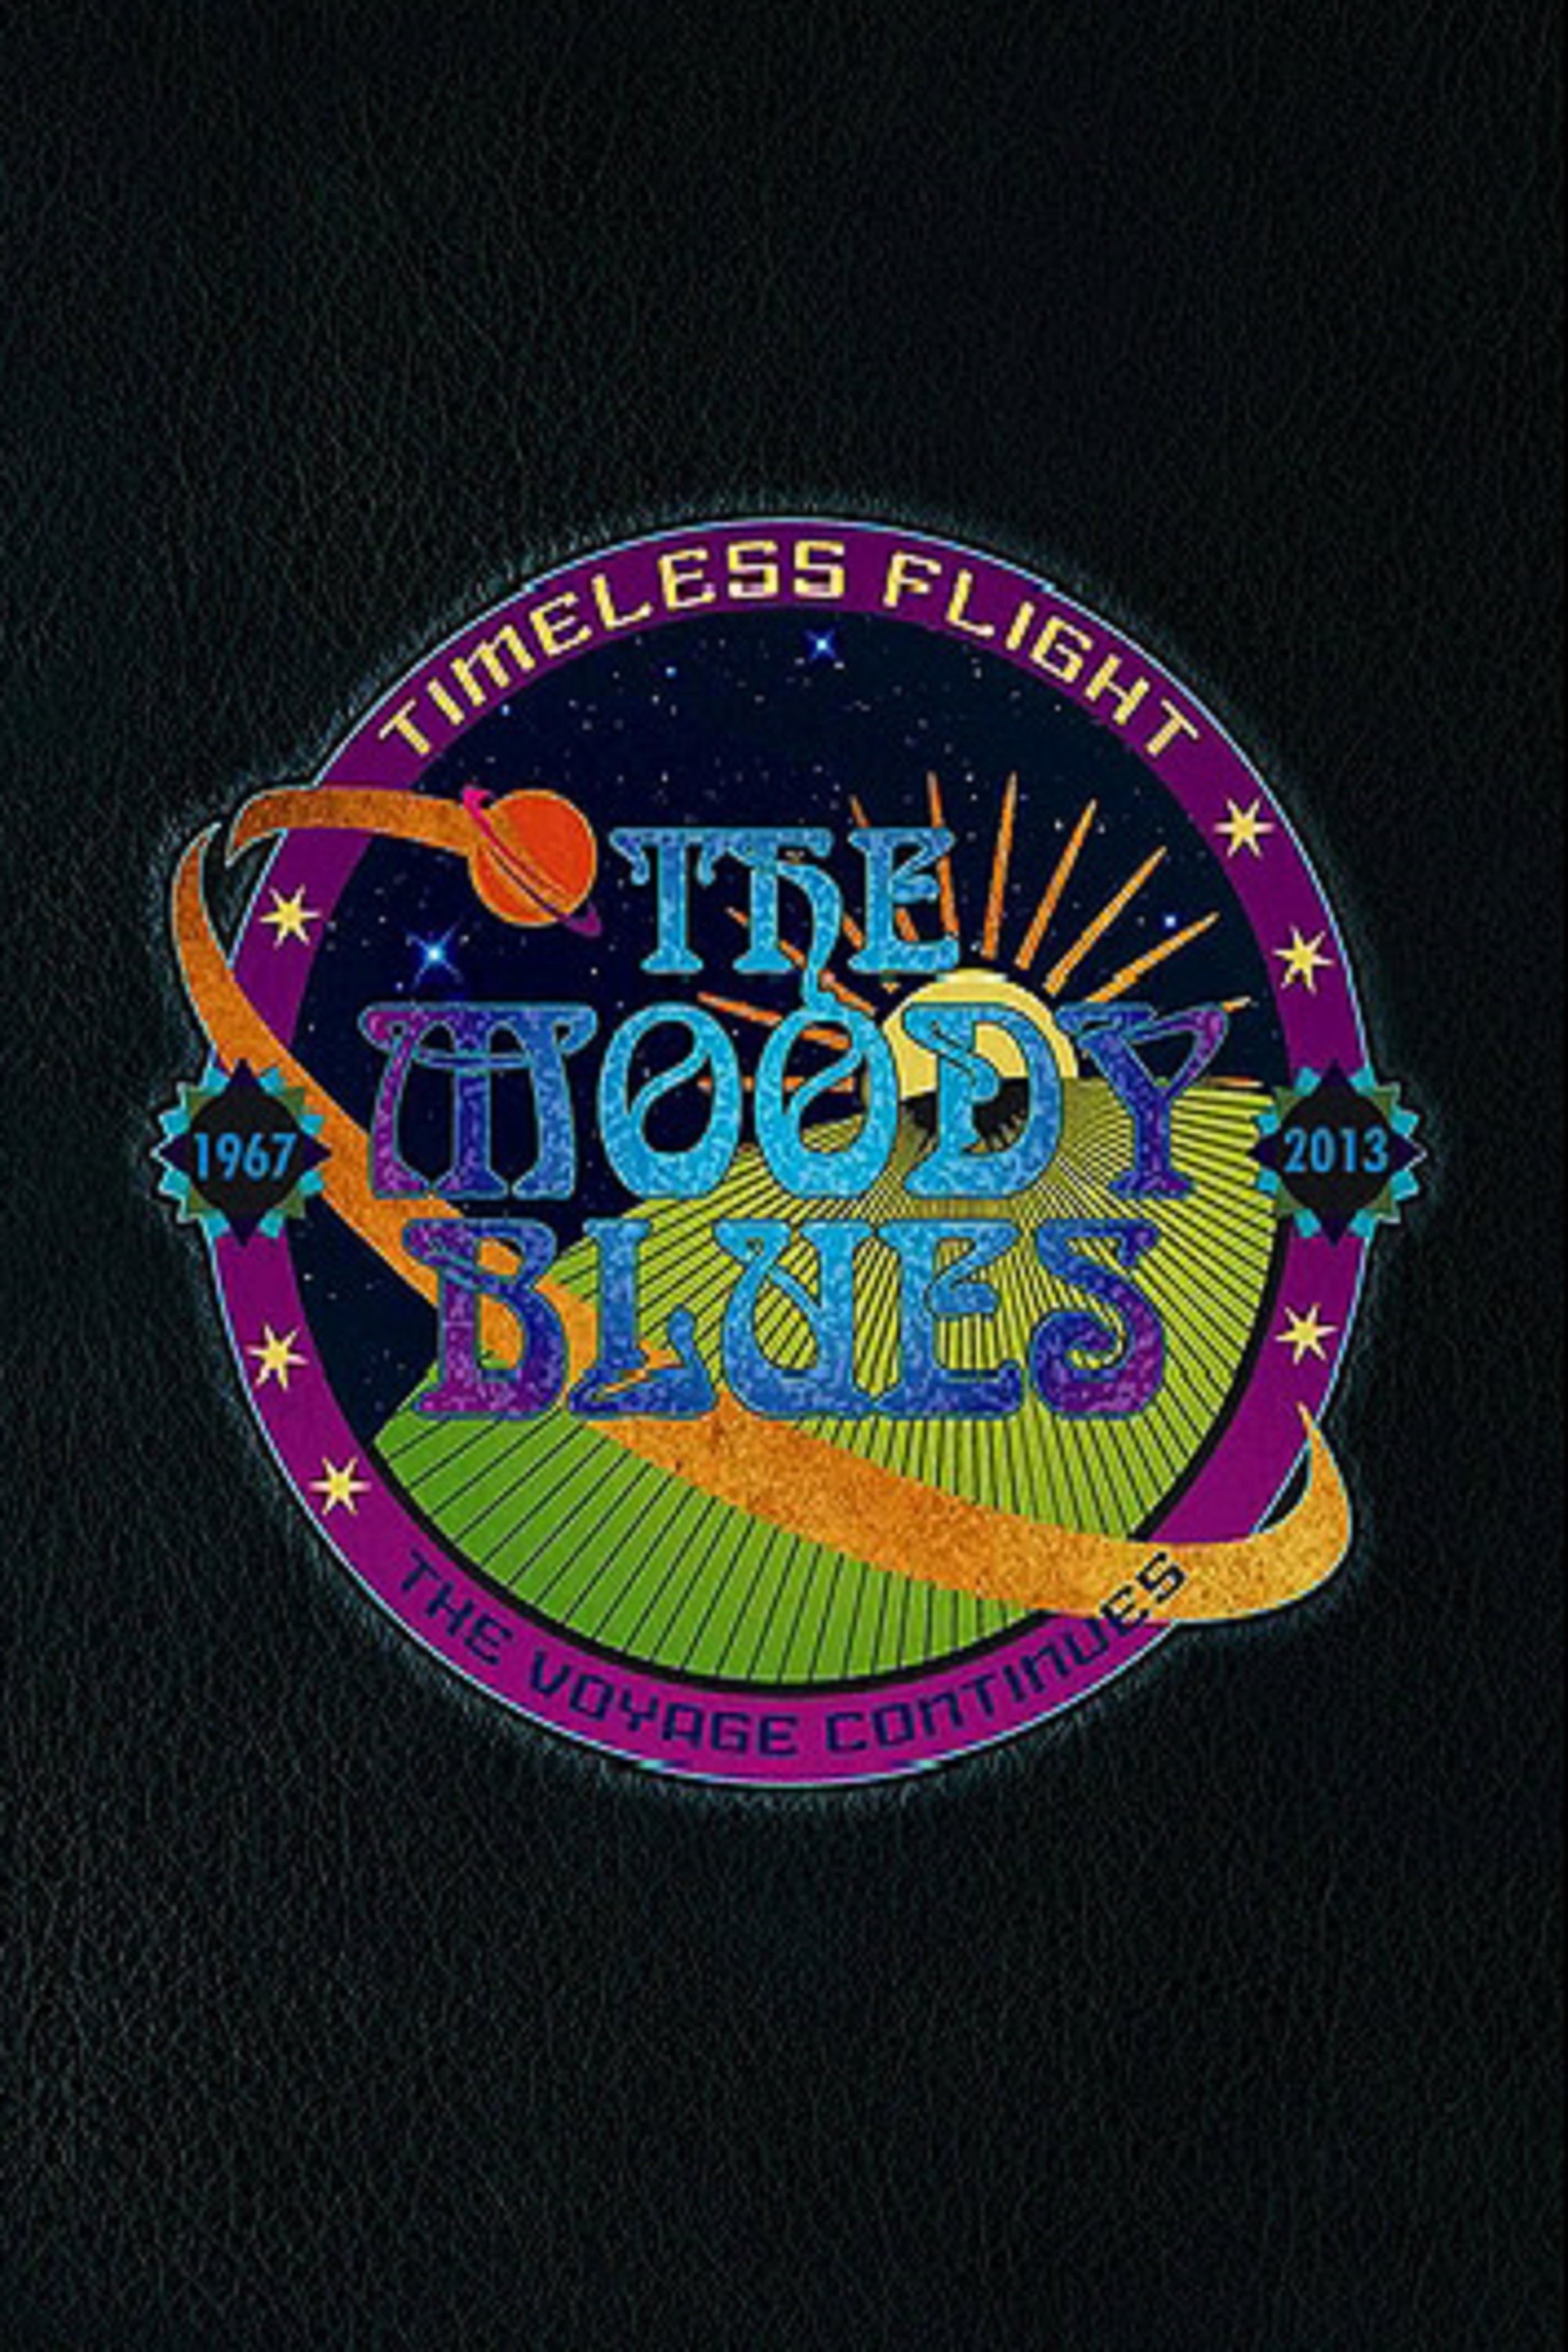 The Moody Blues ‎– Timeless Flight